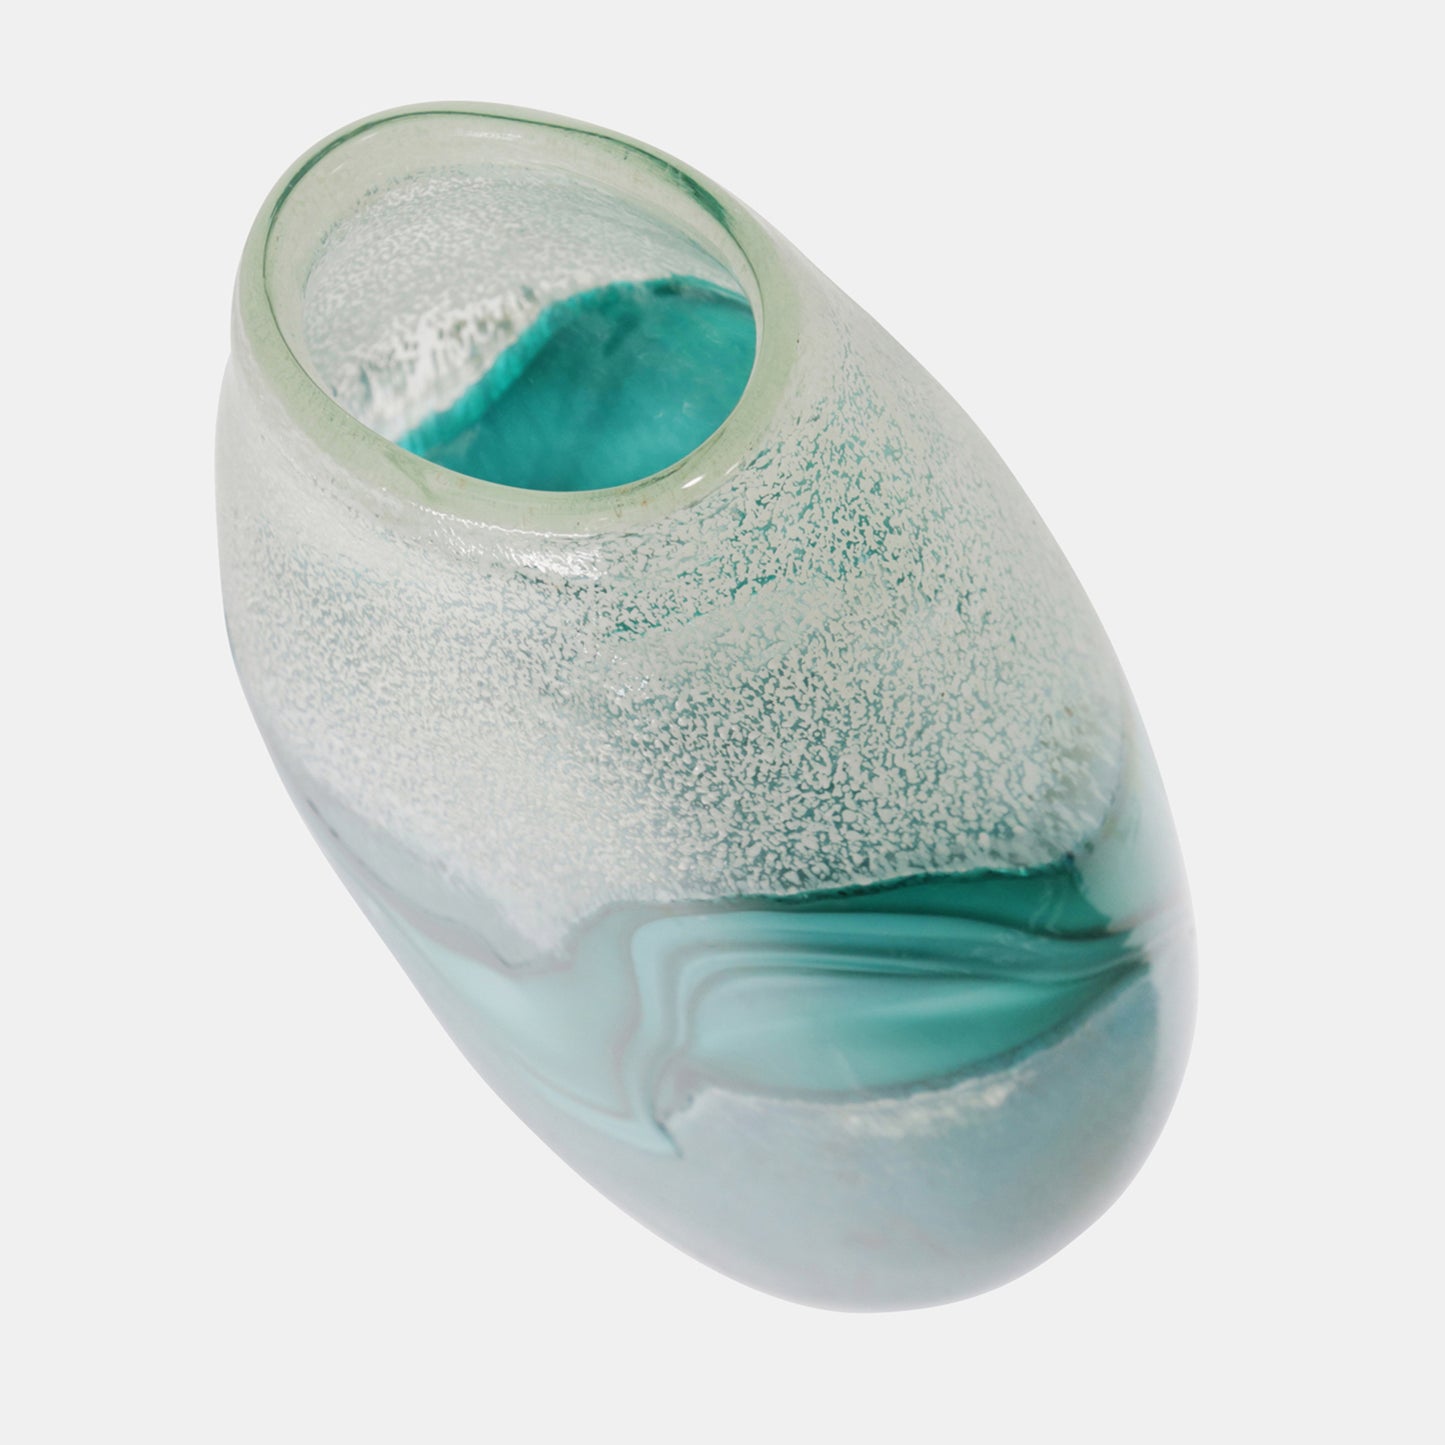 17" H Glass Vase, Green Mix